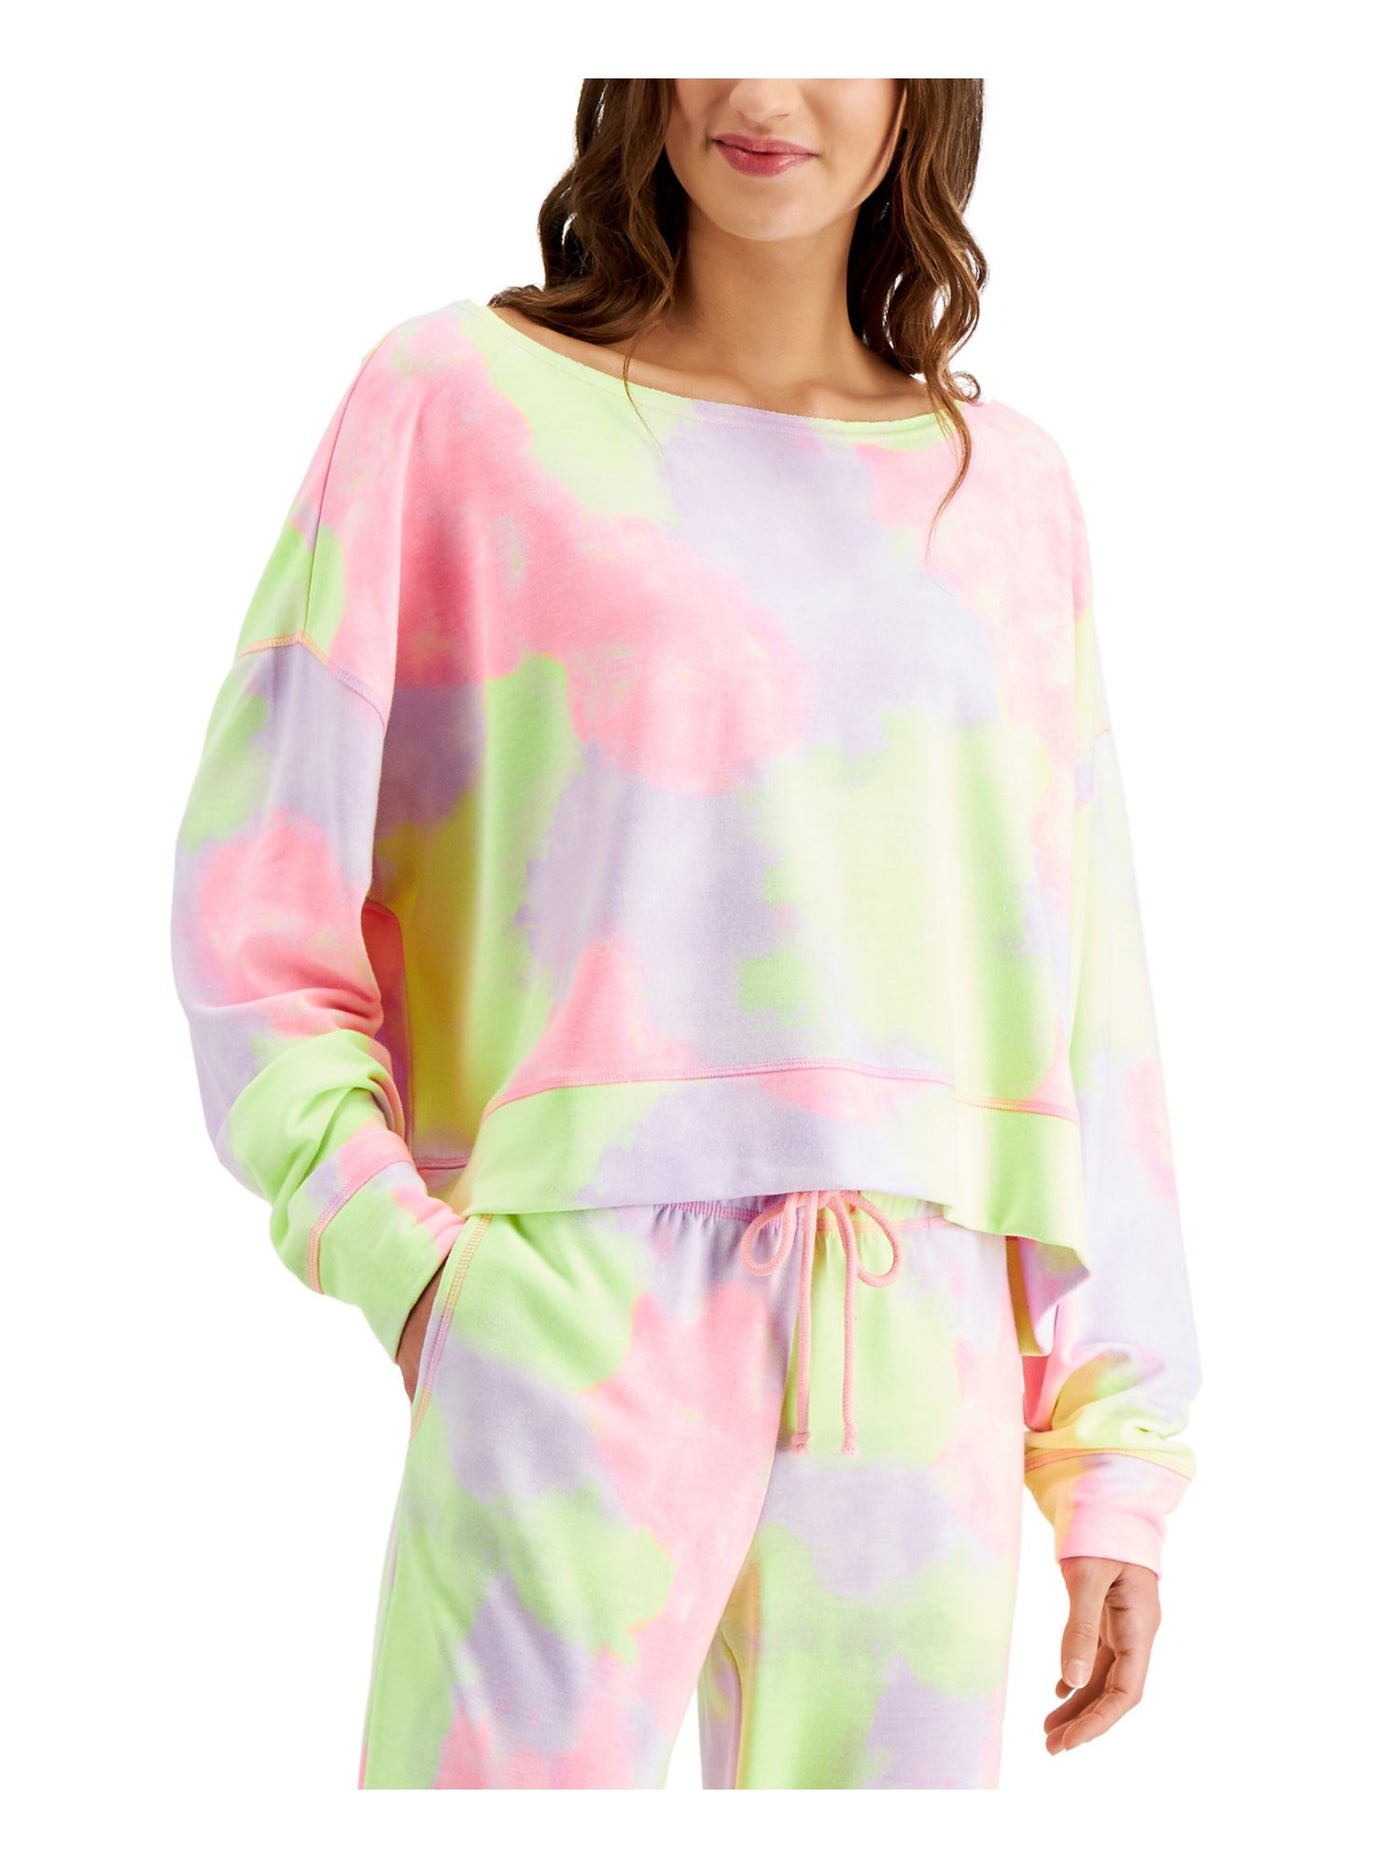 JENNI Intimates Pink Crewneck Cropped Sweatshirt Sleep Shirt Pajama Top M